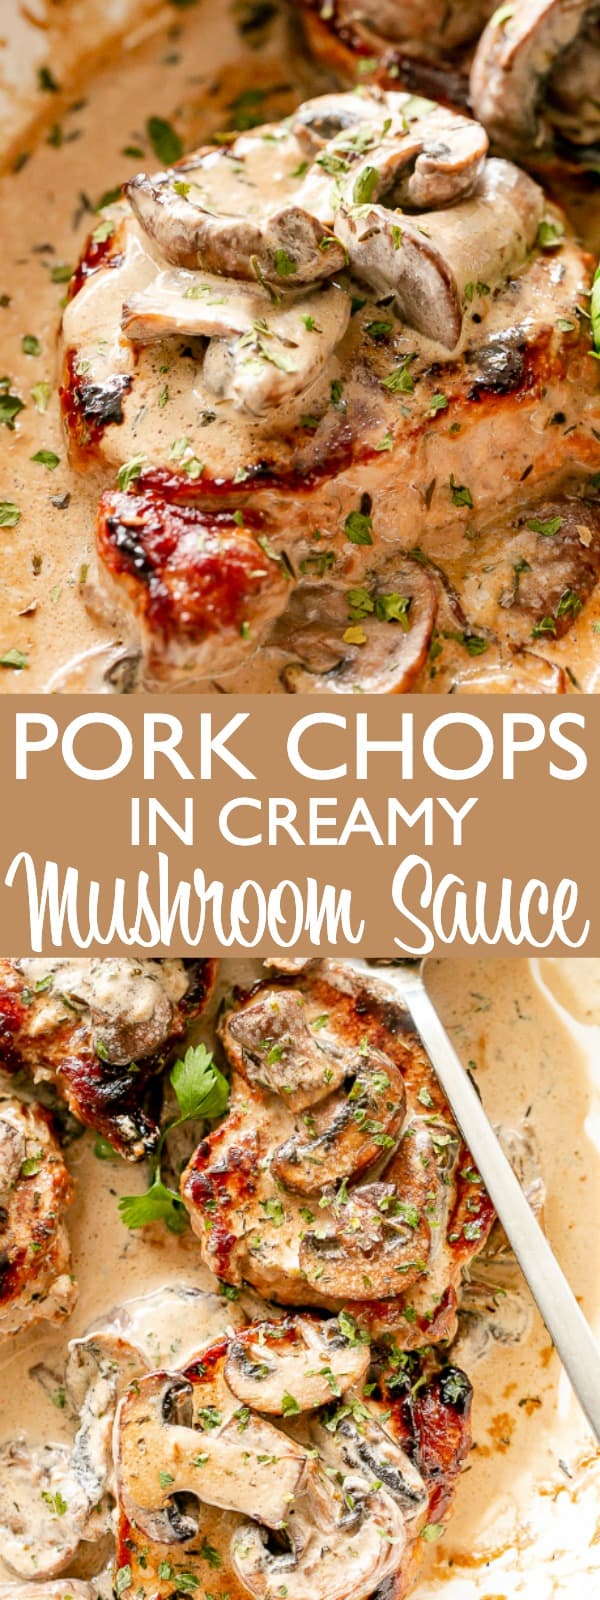 Pork Chops with Mushroom Gravy | Diethood